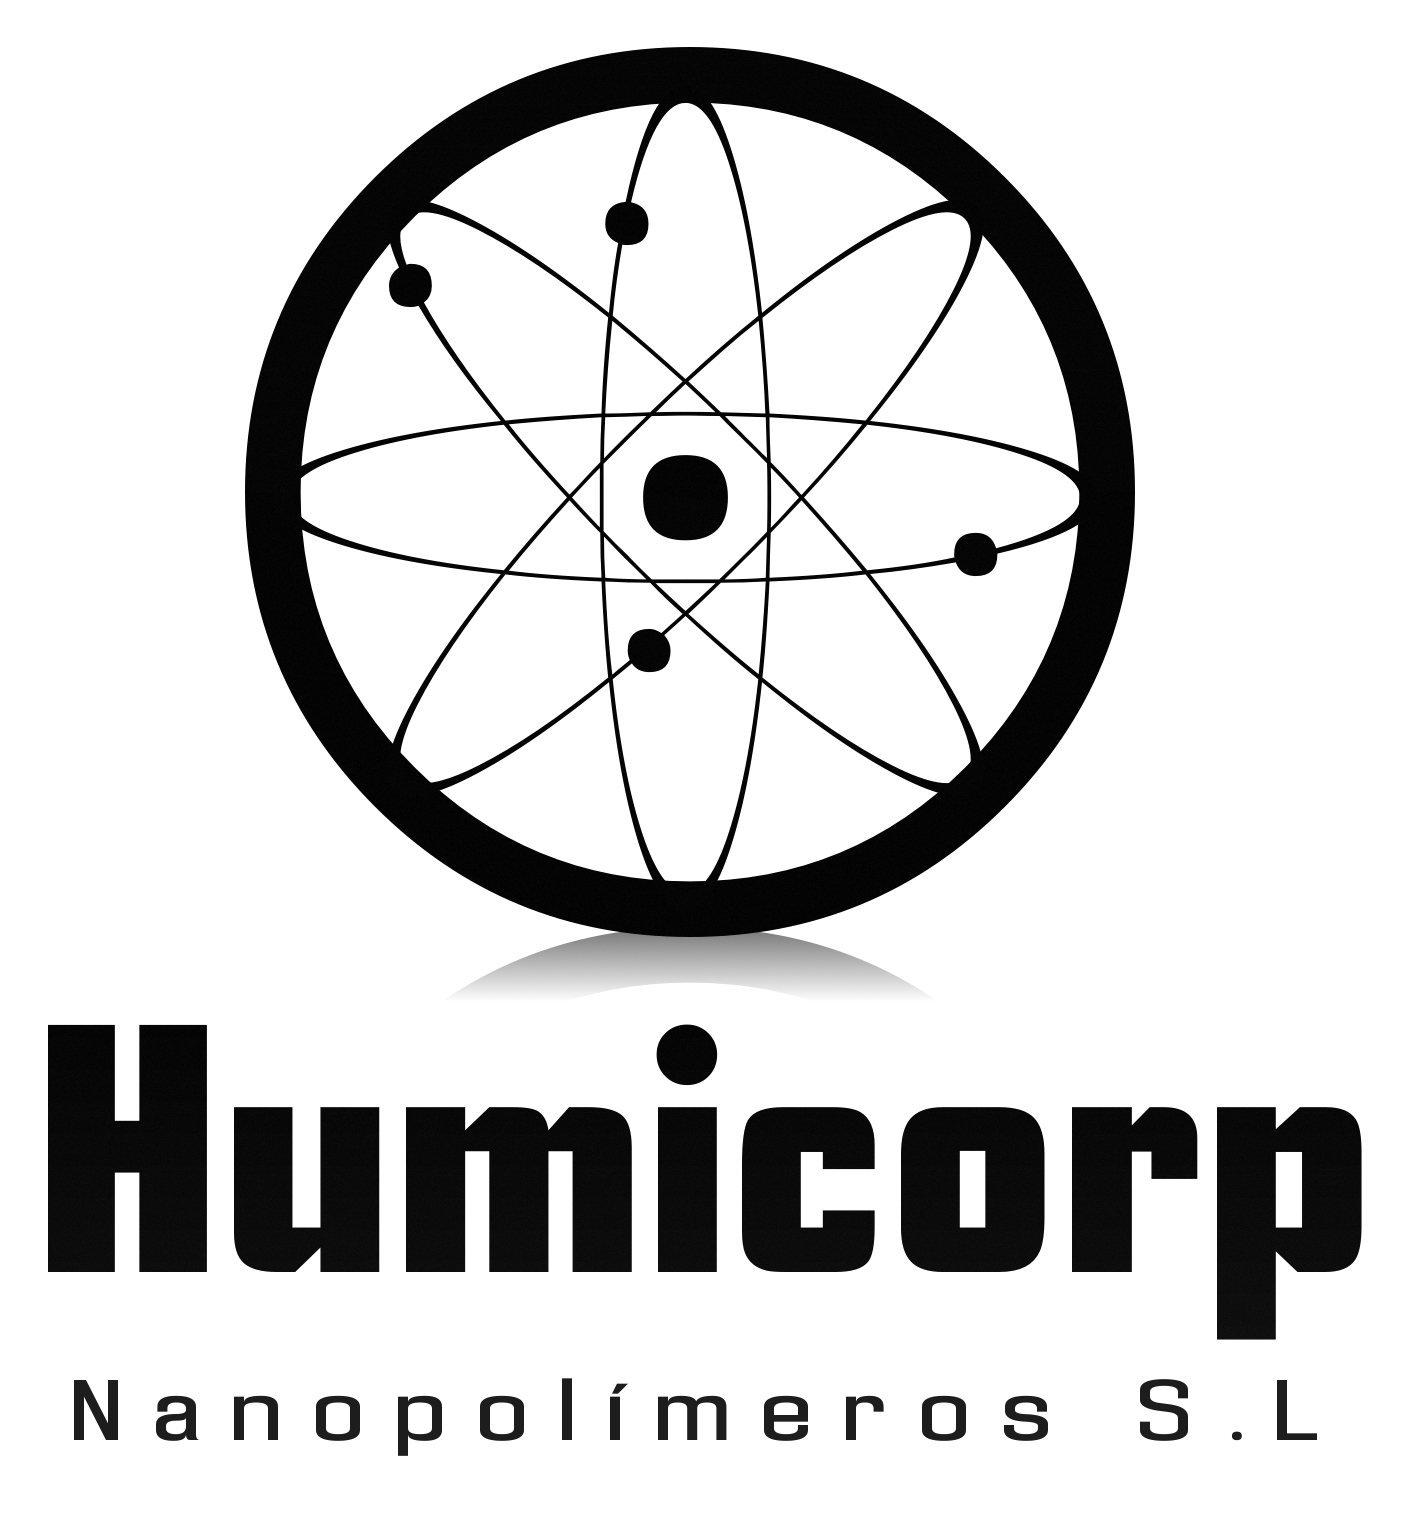 Humicorp Nanopolímeros S.L